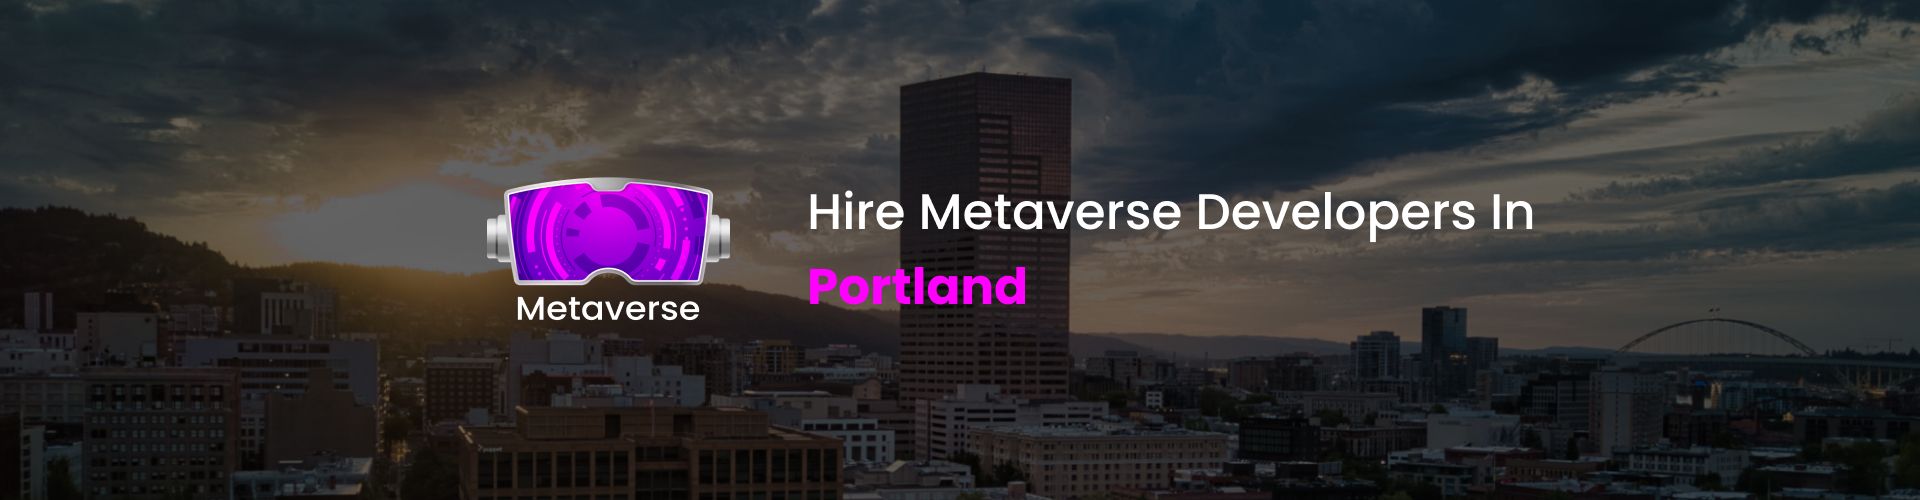 hire metaverse developers in portland